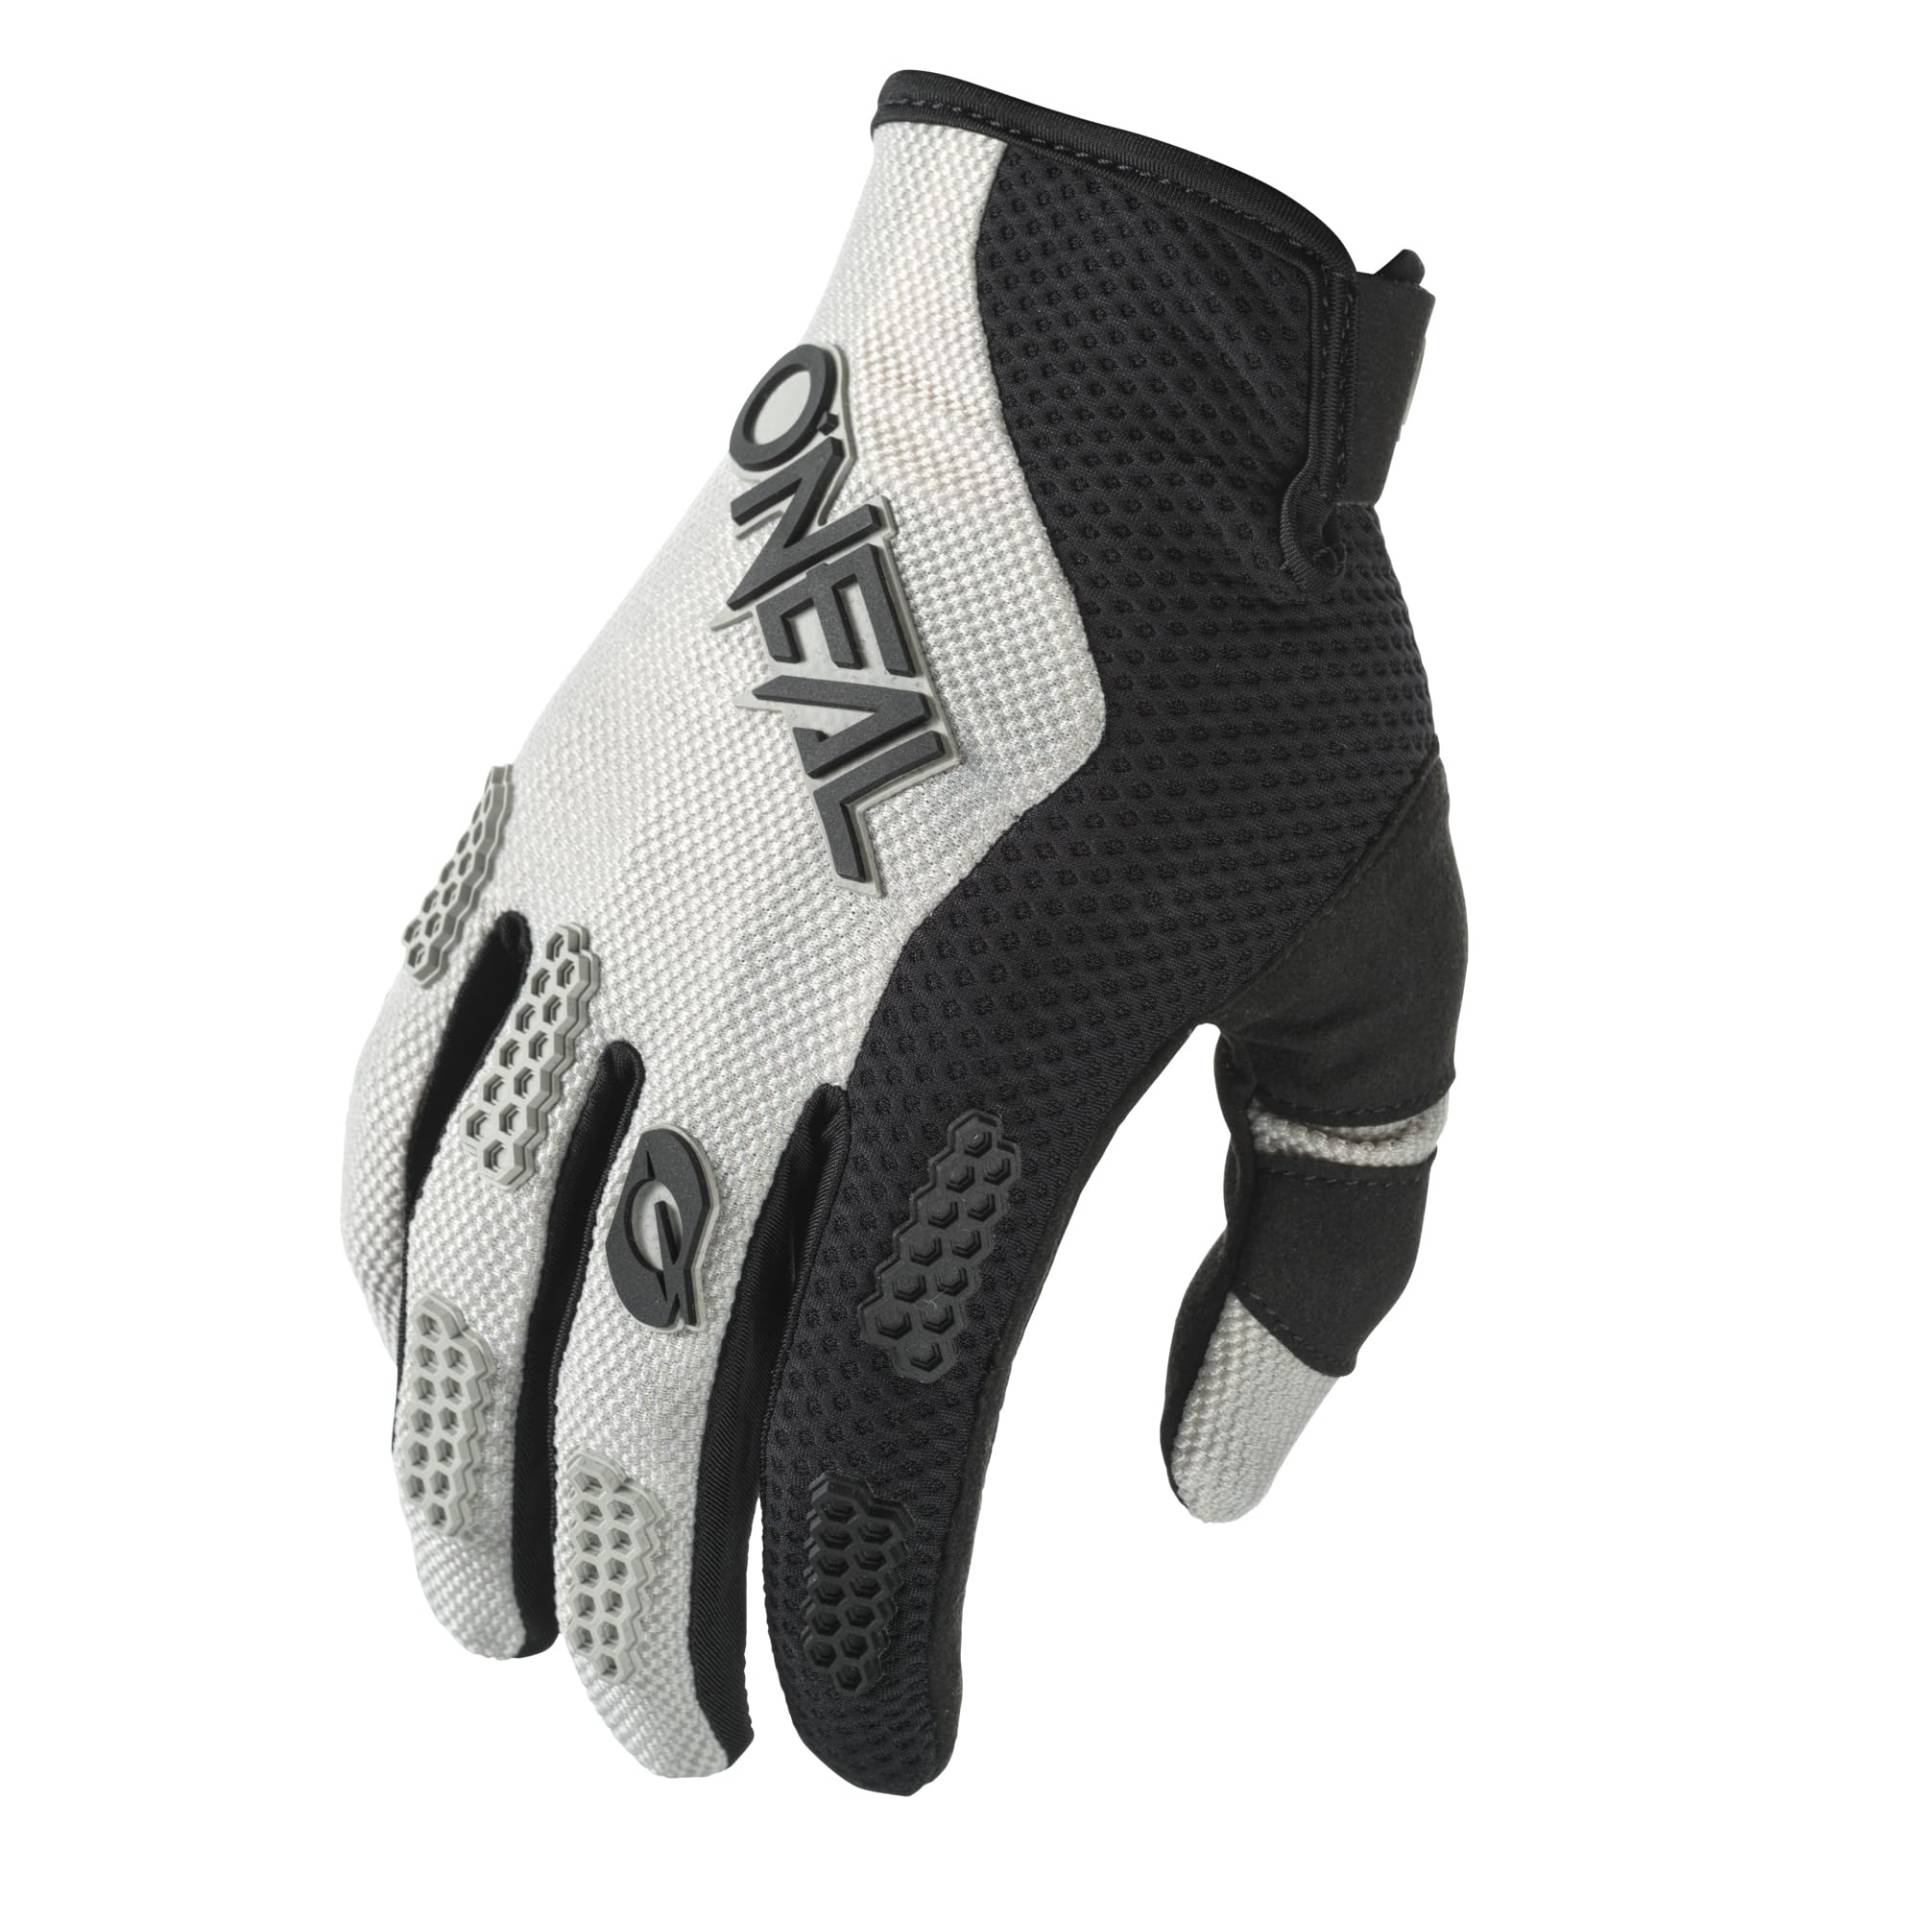 O'NEAL | Fahrrad- & Motocross-Handschuhe | MX MTB FR Downhill | Passform, Luftdurchlässiges Material | Element Glove RACEWEAR V.24 | Erwachsene | Schwarz Grau | Größe L von O'NEAL